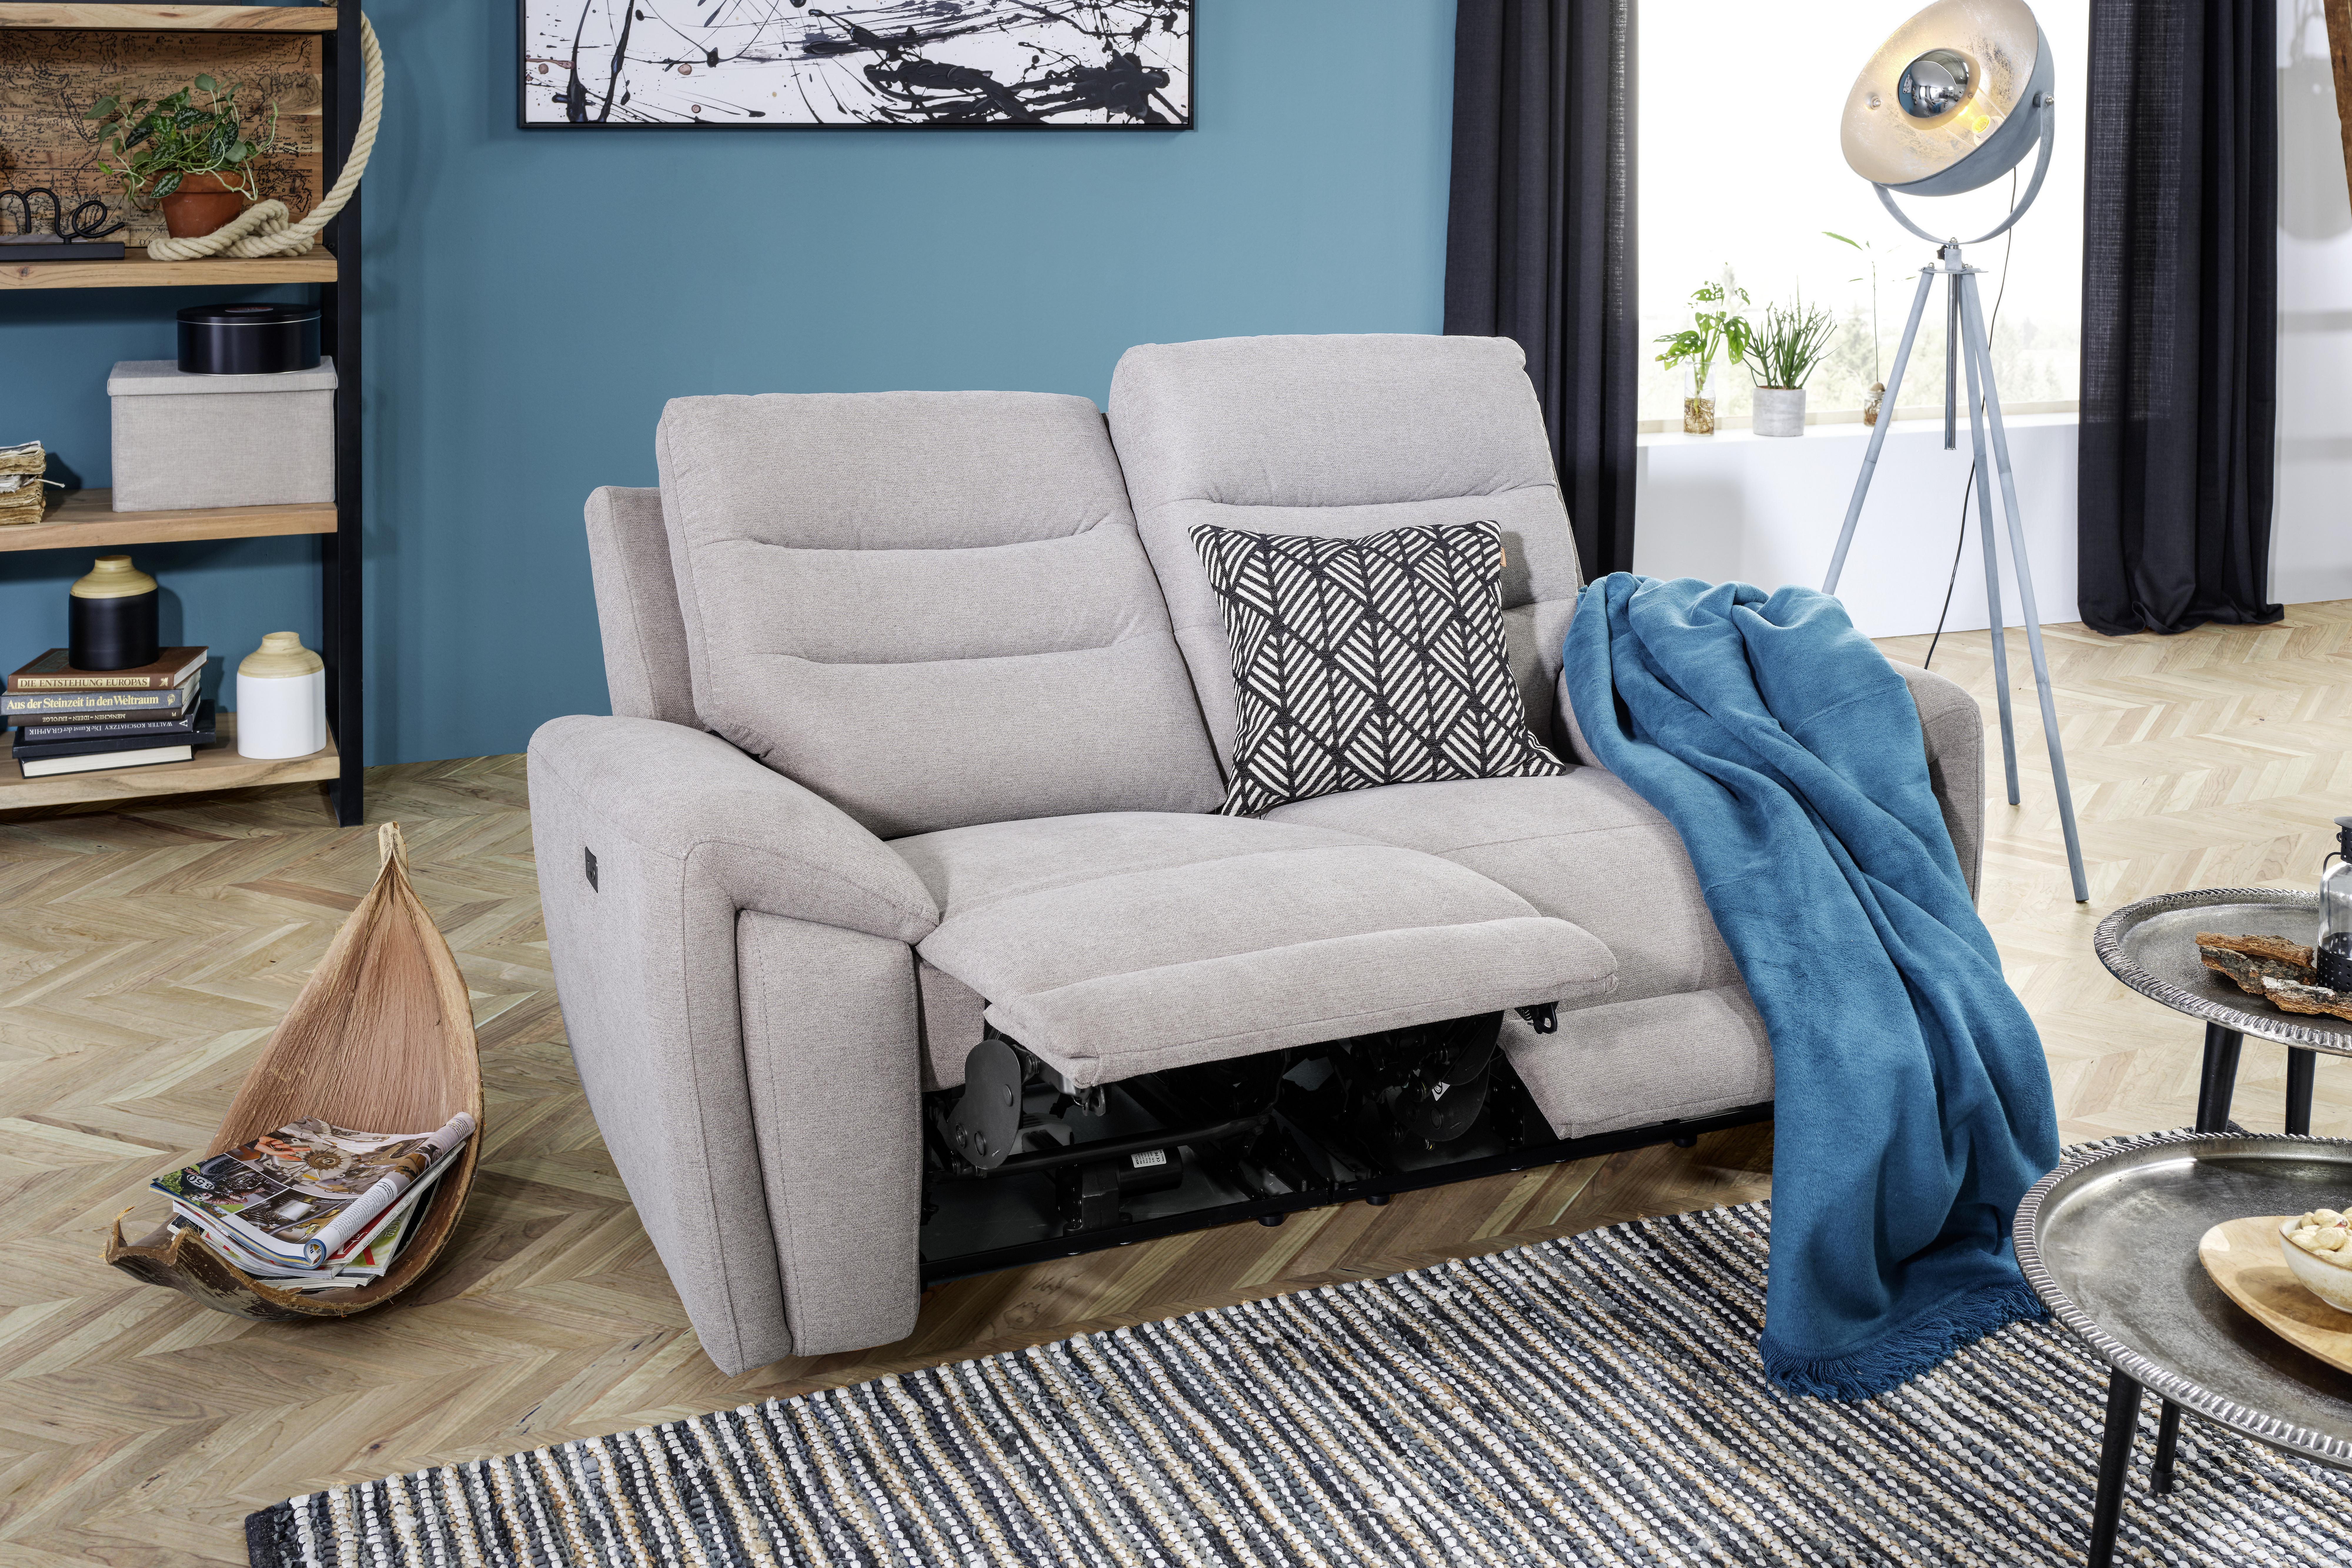 Sofa in Grau - Schwarz/Grau, Konventionell, Textil (169/94/100cm) - Modern Living